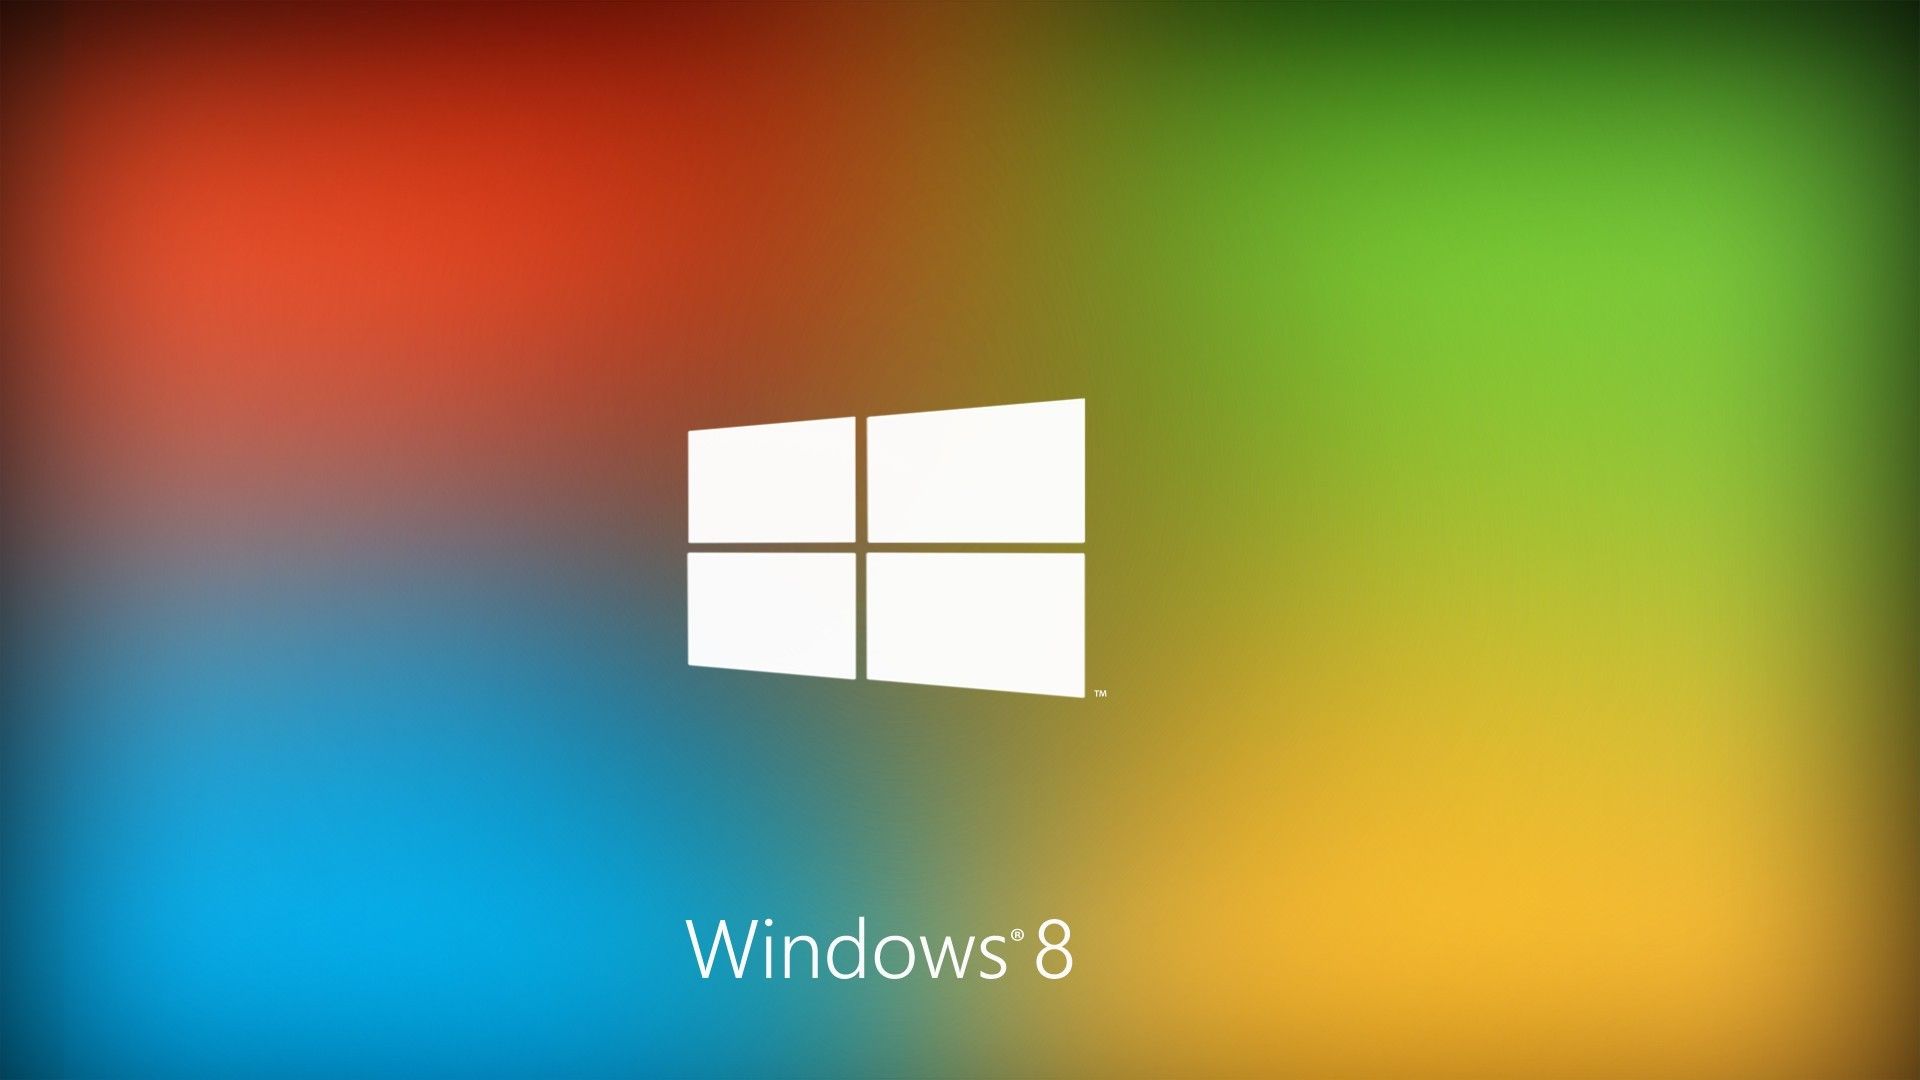 Windows 8 wallpaper hd 1080p download